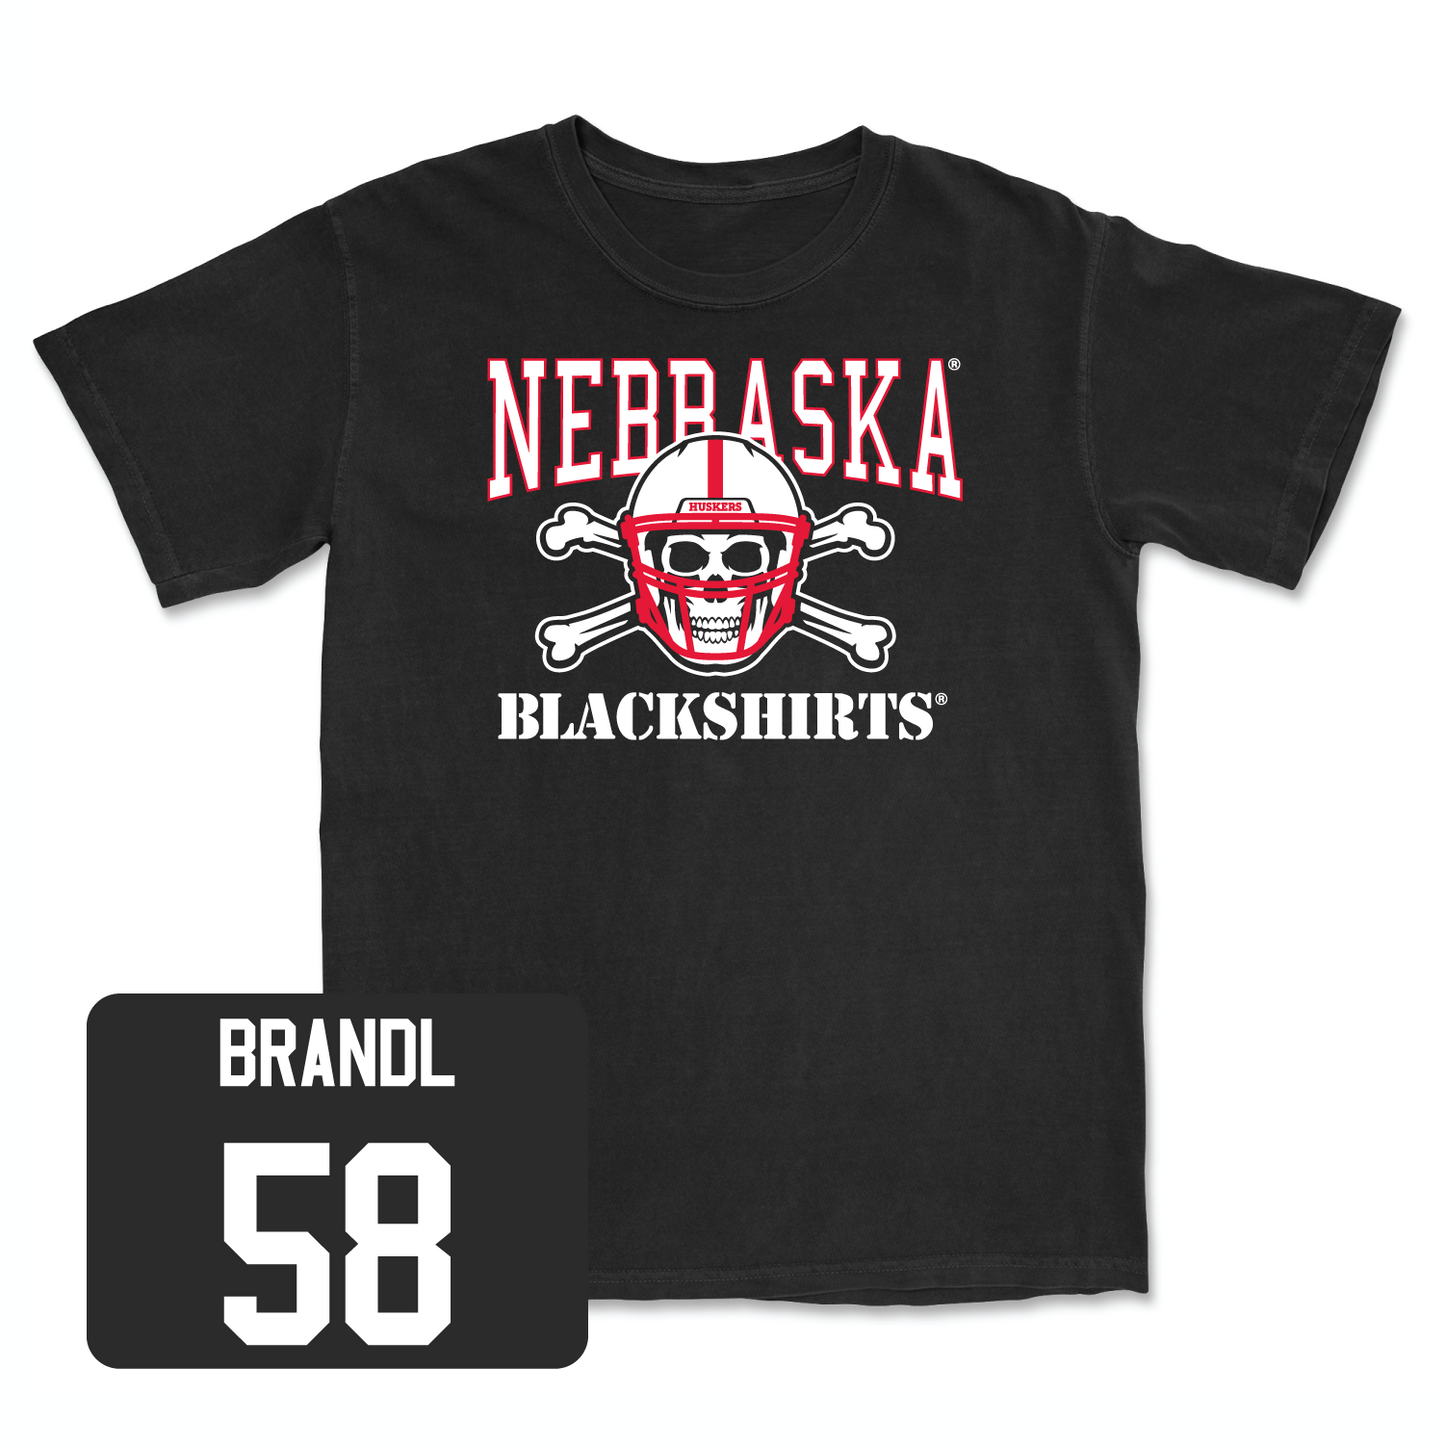 Black Football Blackshirts Tee Small / Jacob Brandl | #58